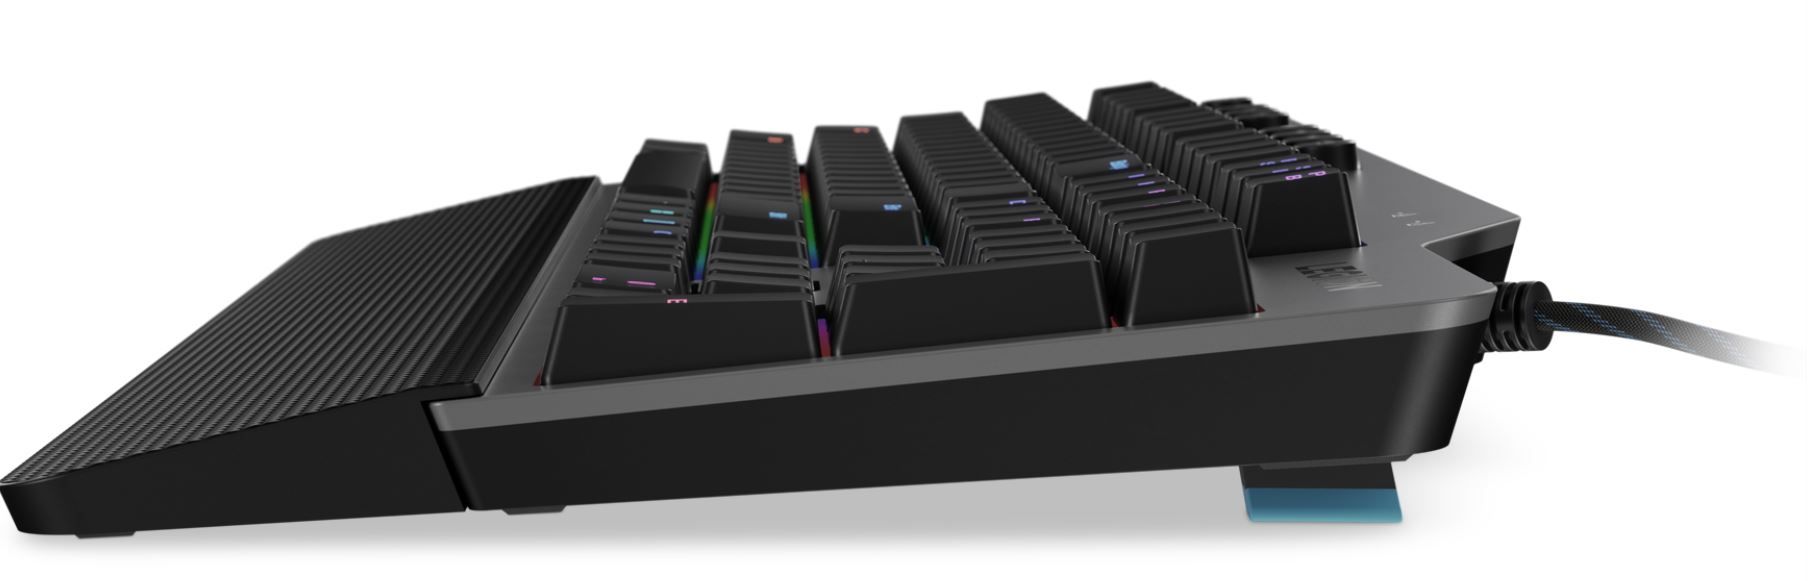 Lenovo Legion K500 RGB Mechanical Gaming Keyboard